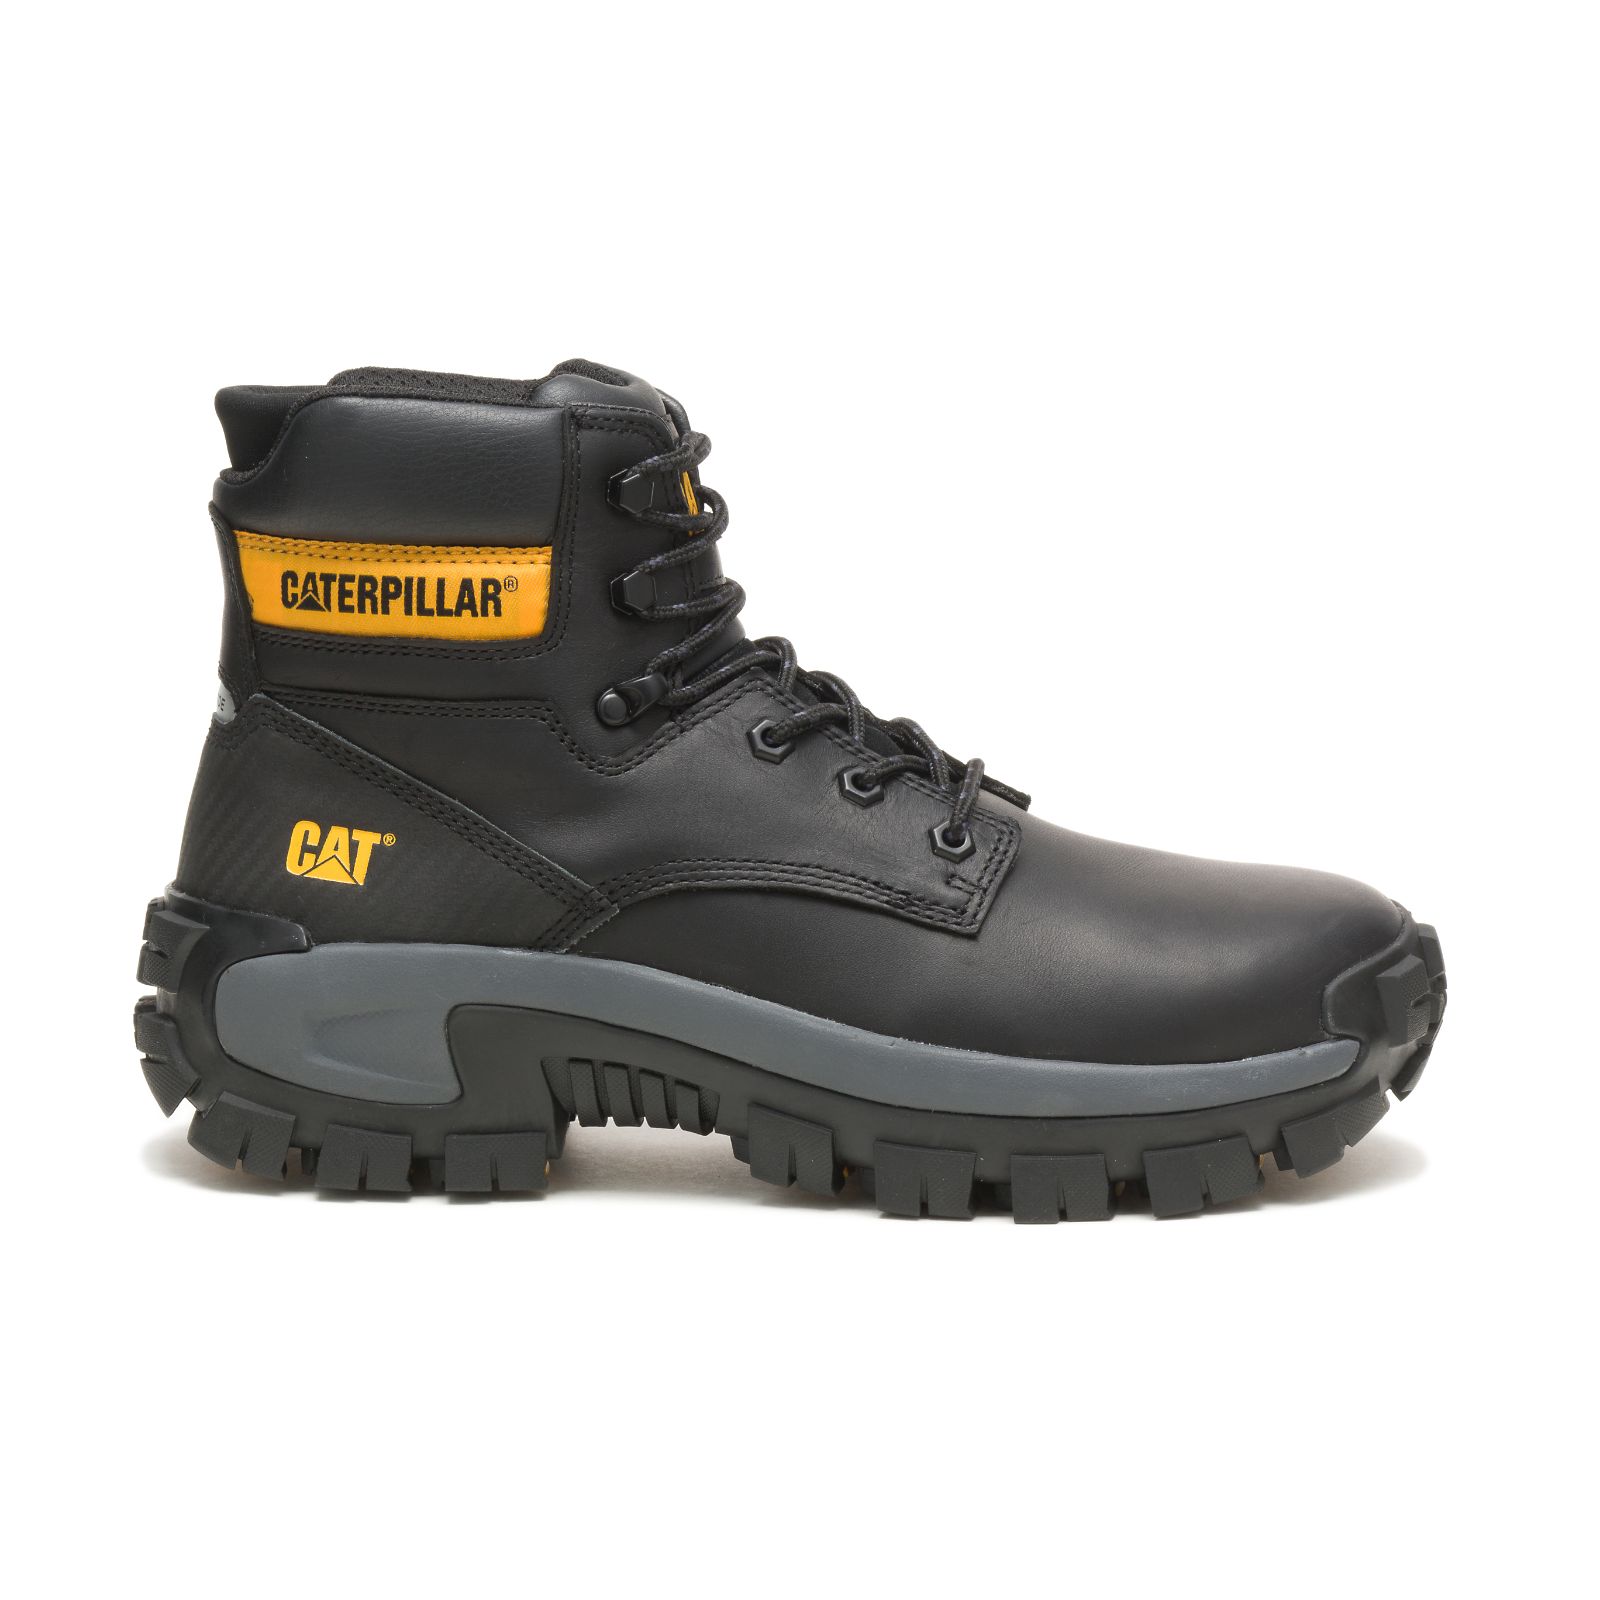 Caterpillar Work Boots UAE - Caterpillar Invader Hi Steel Toe Mens - Black RDKFJS014